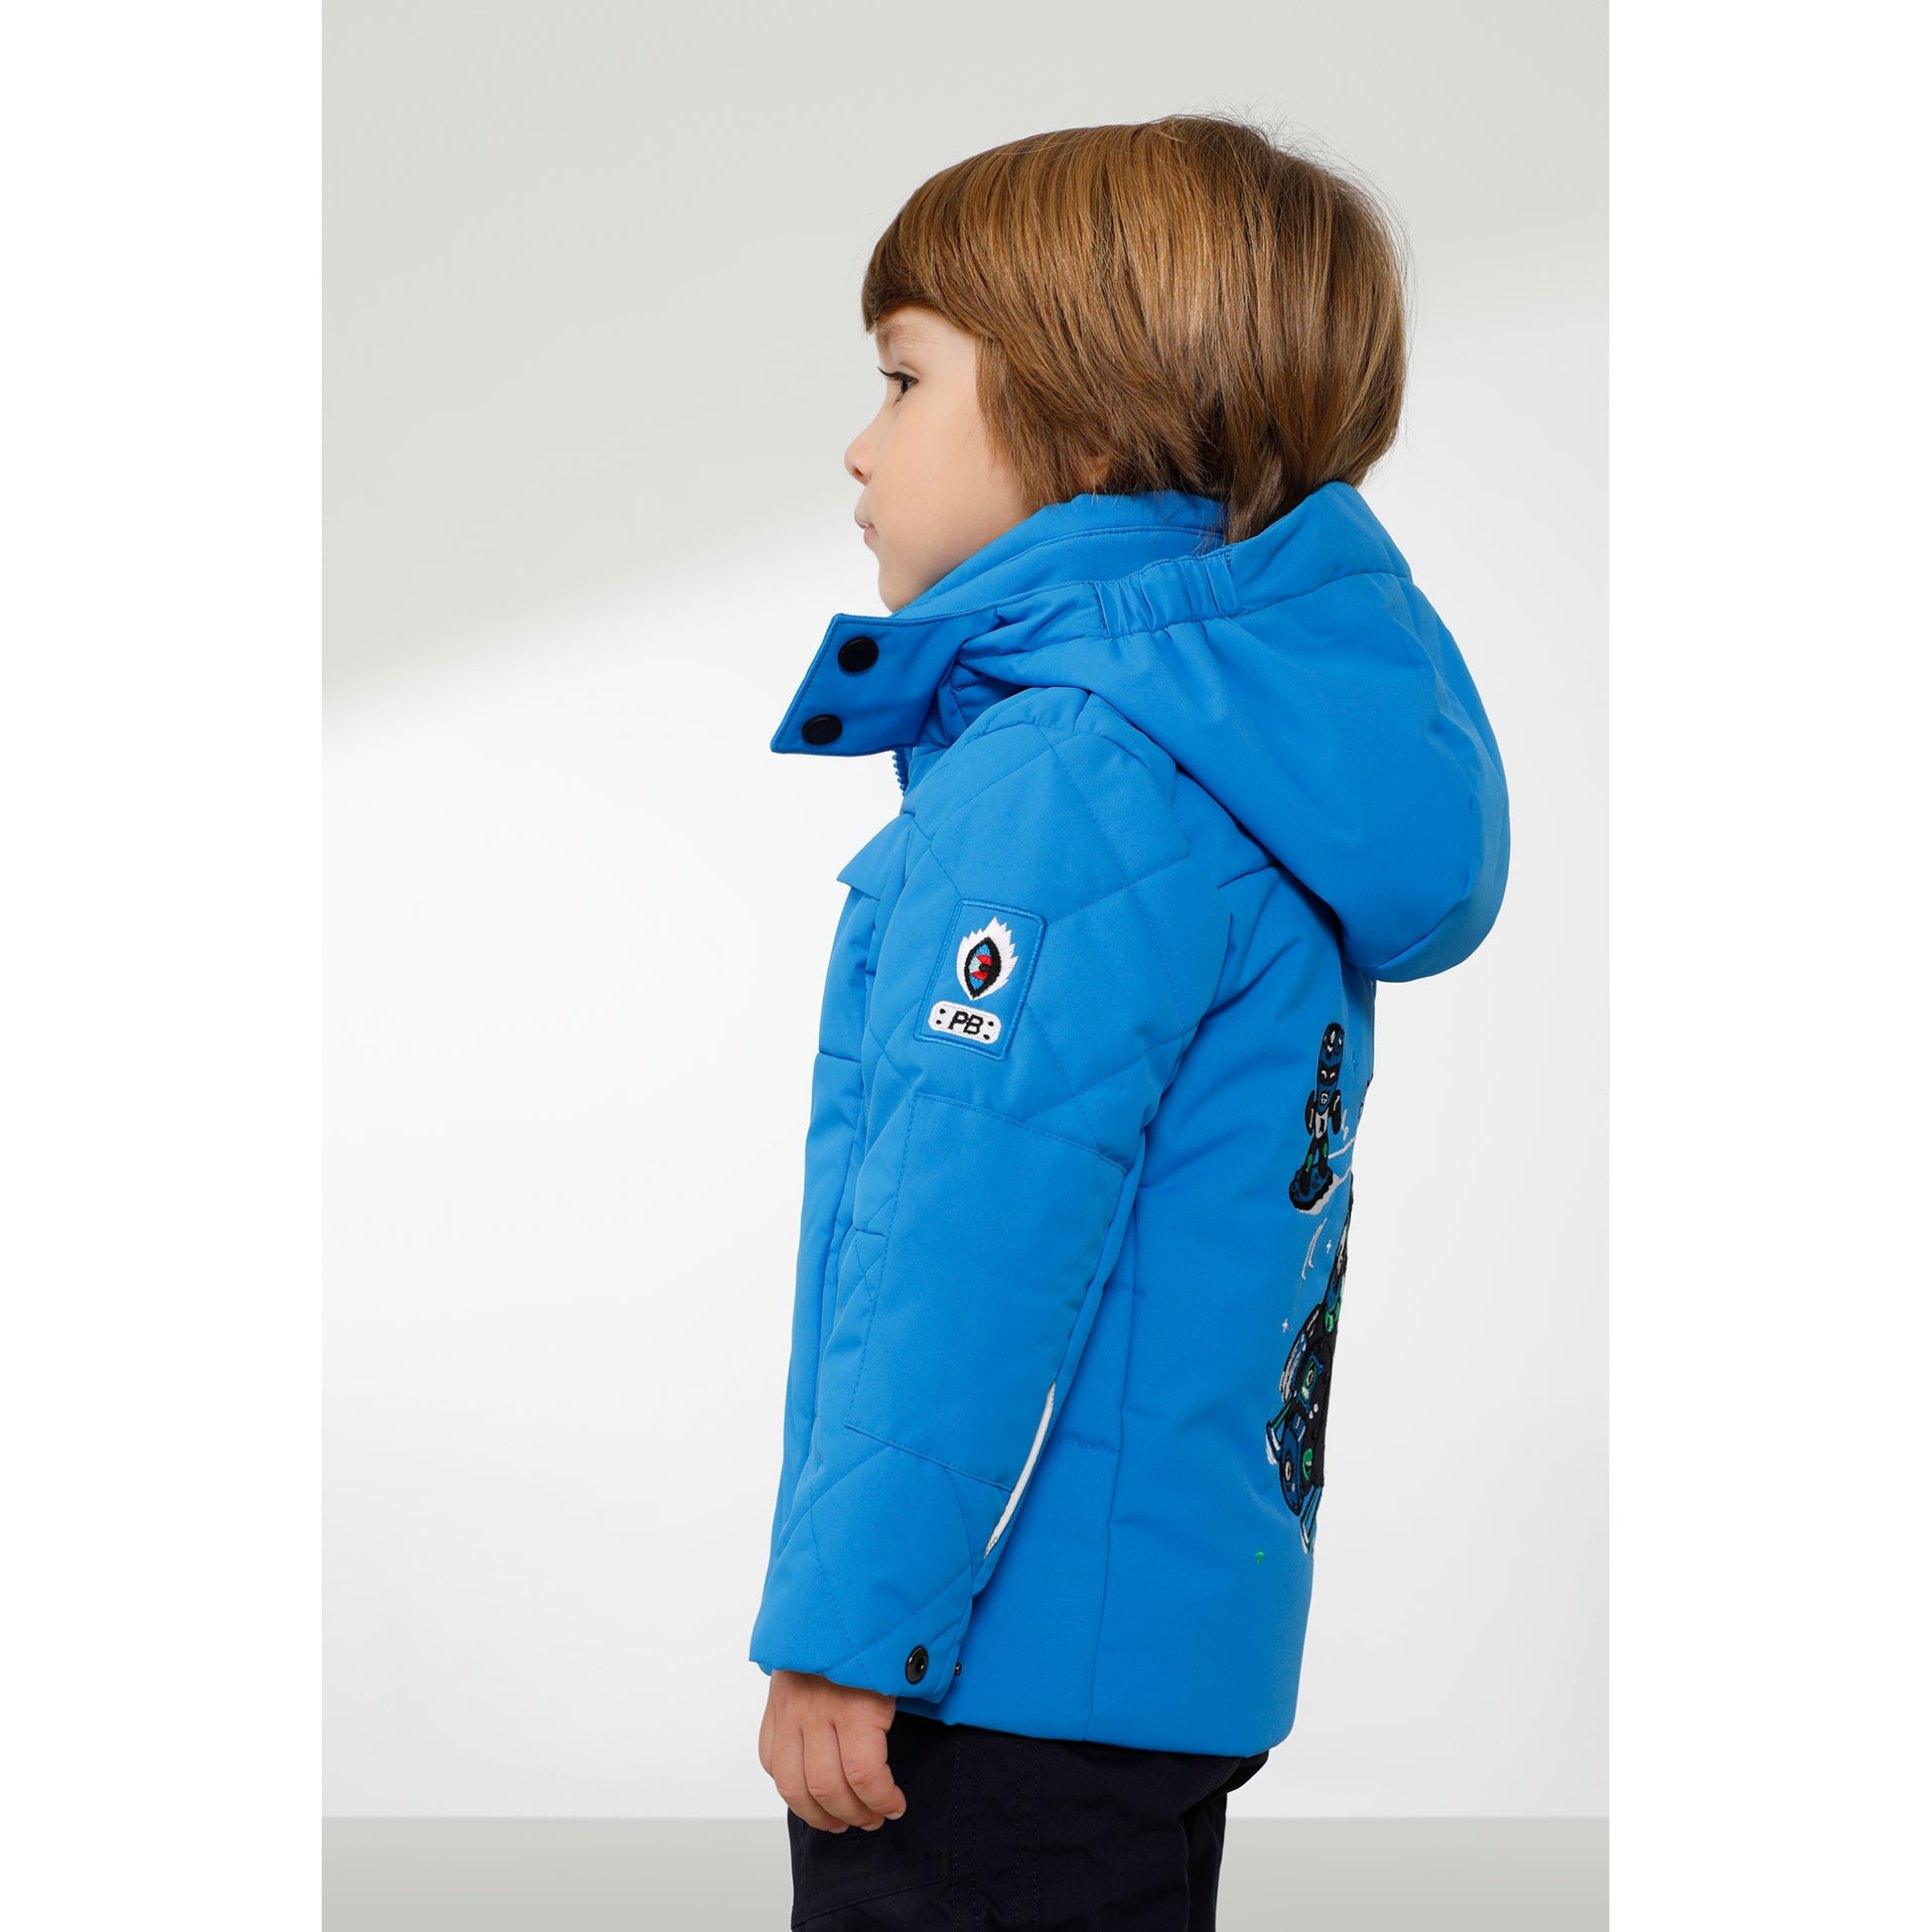 Poivre Blanc Baby Boy's Ski Jacket in Scarlet Red 0900 – Poivre Blanc - UK